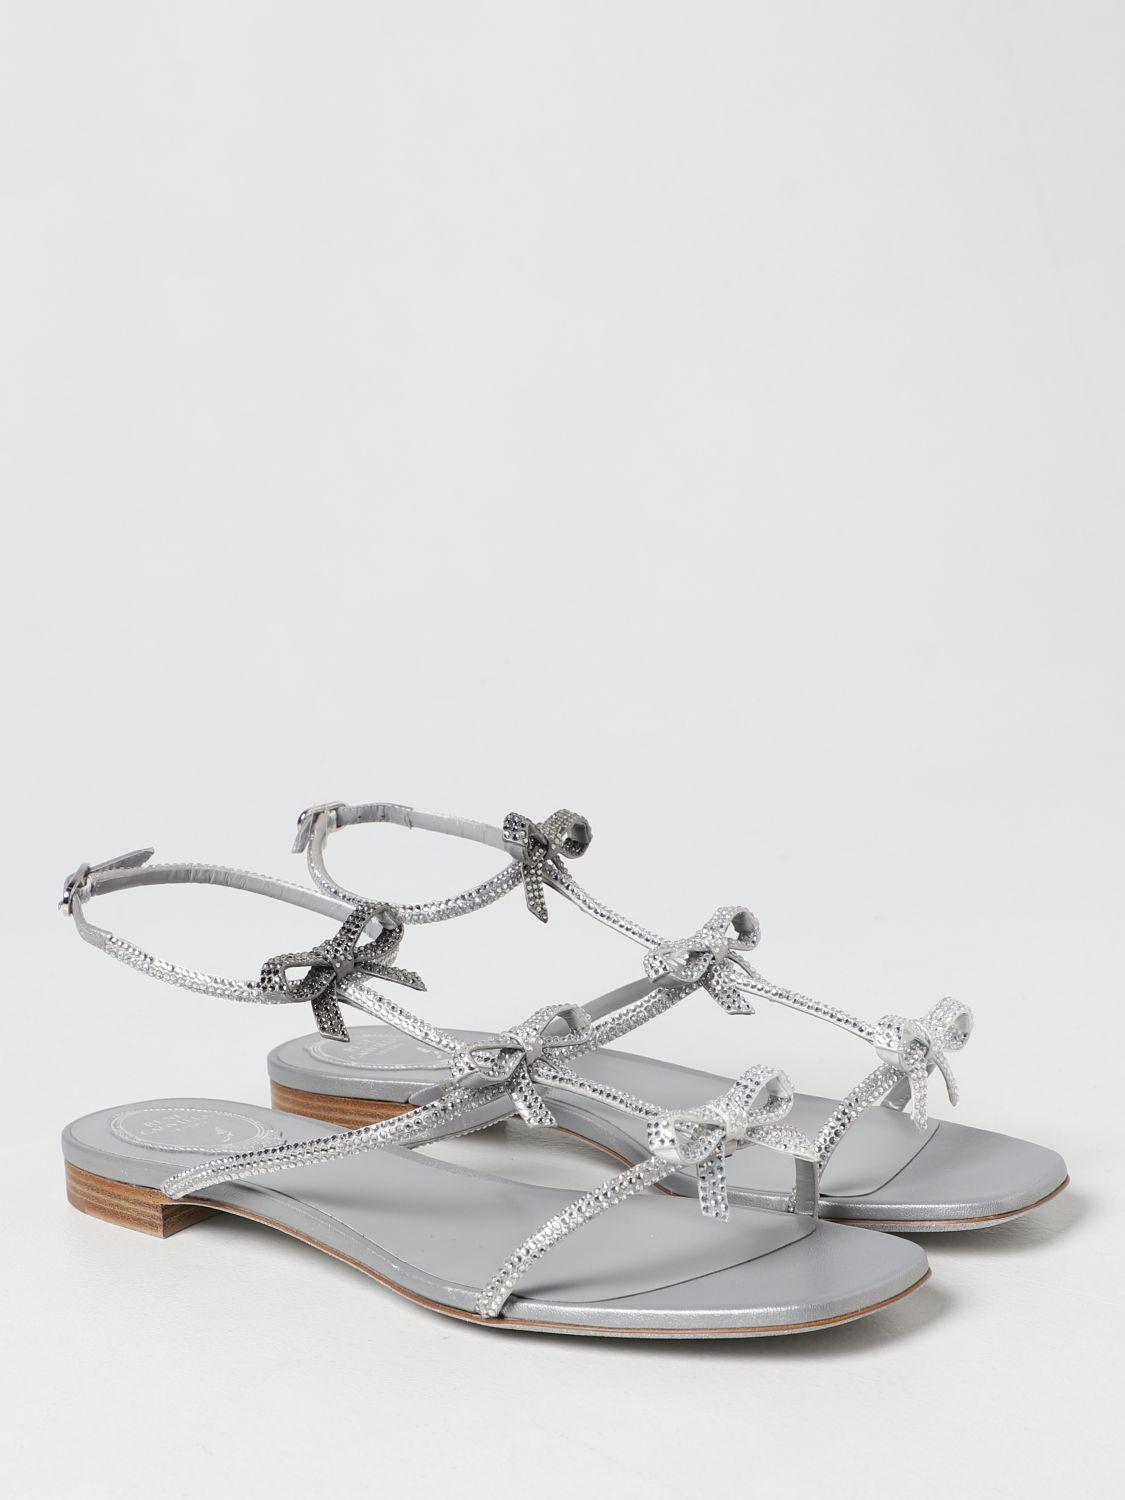 Rene Caovilla Flat Sandals in White | Lyst